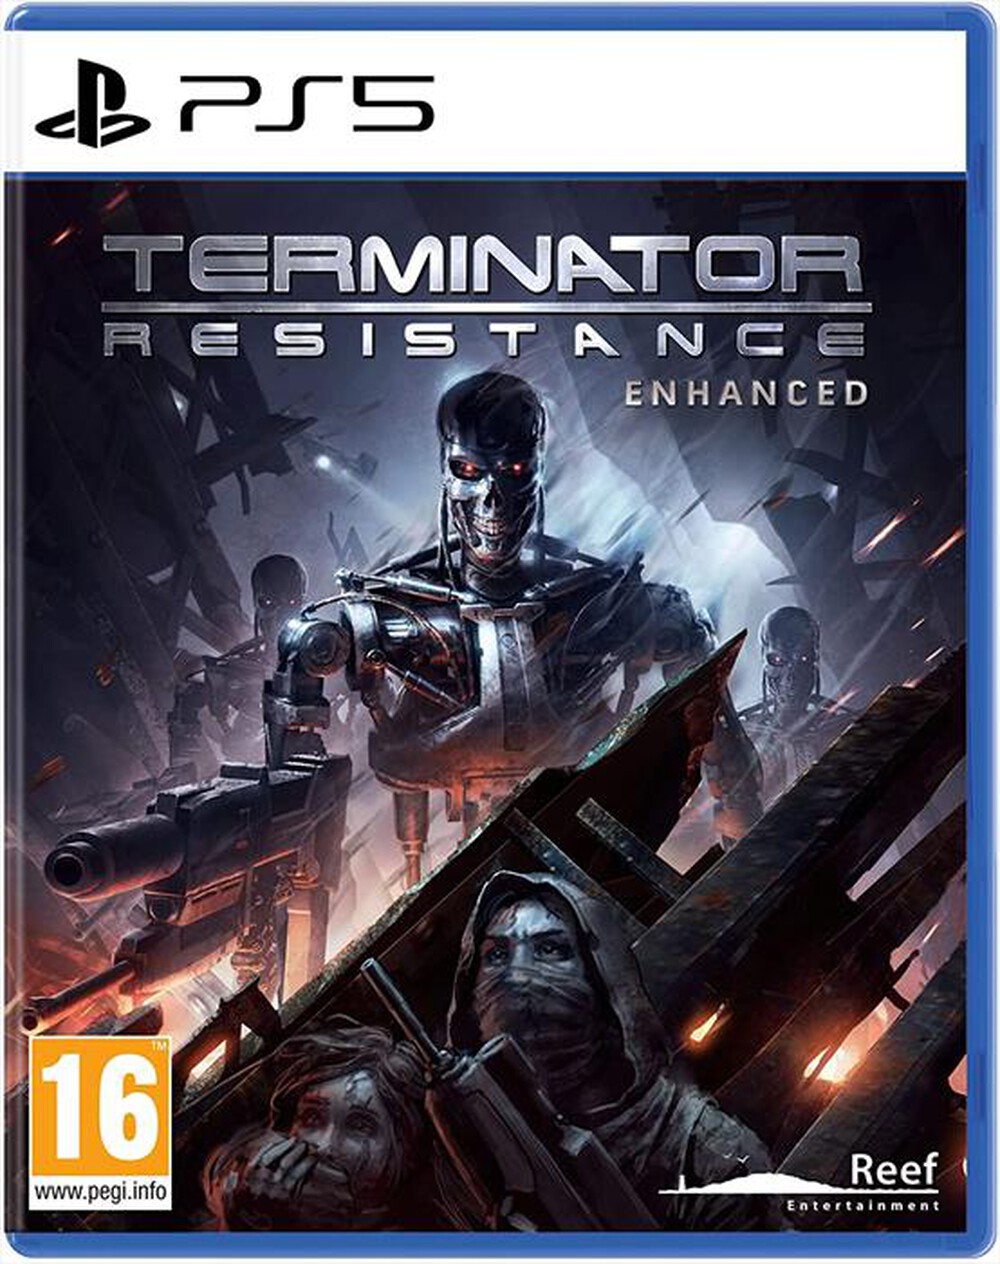 "MT-DISTRIBUTION - Terminator: Resistance Enhanced"